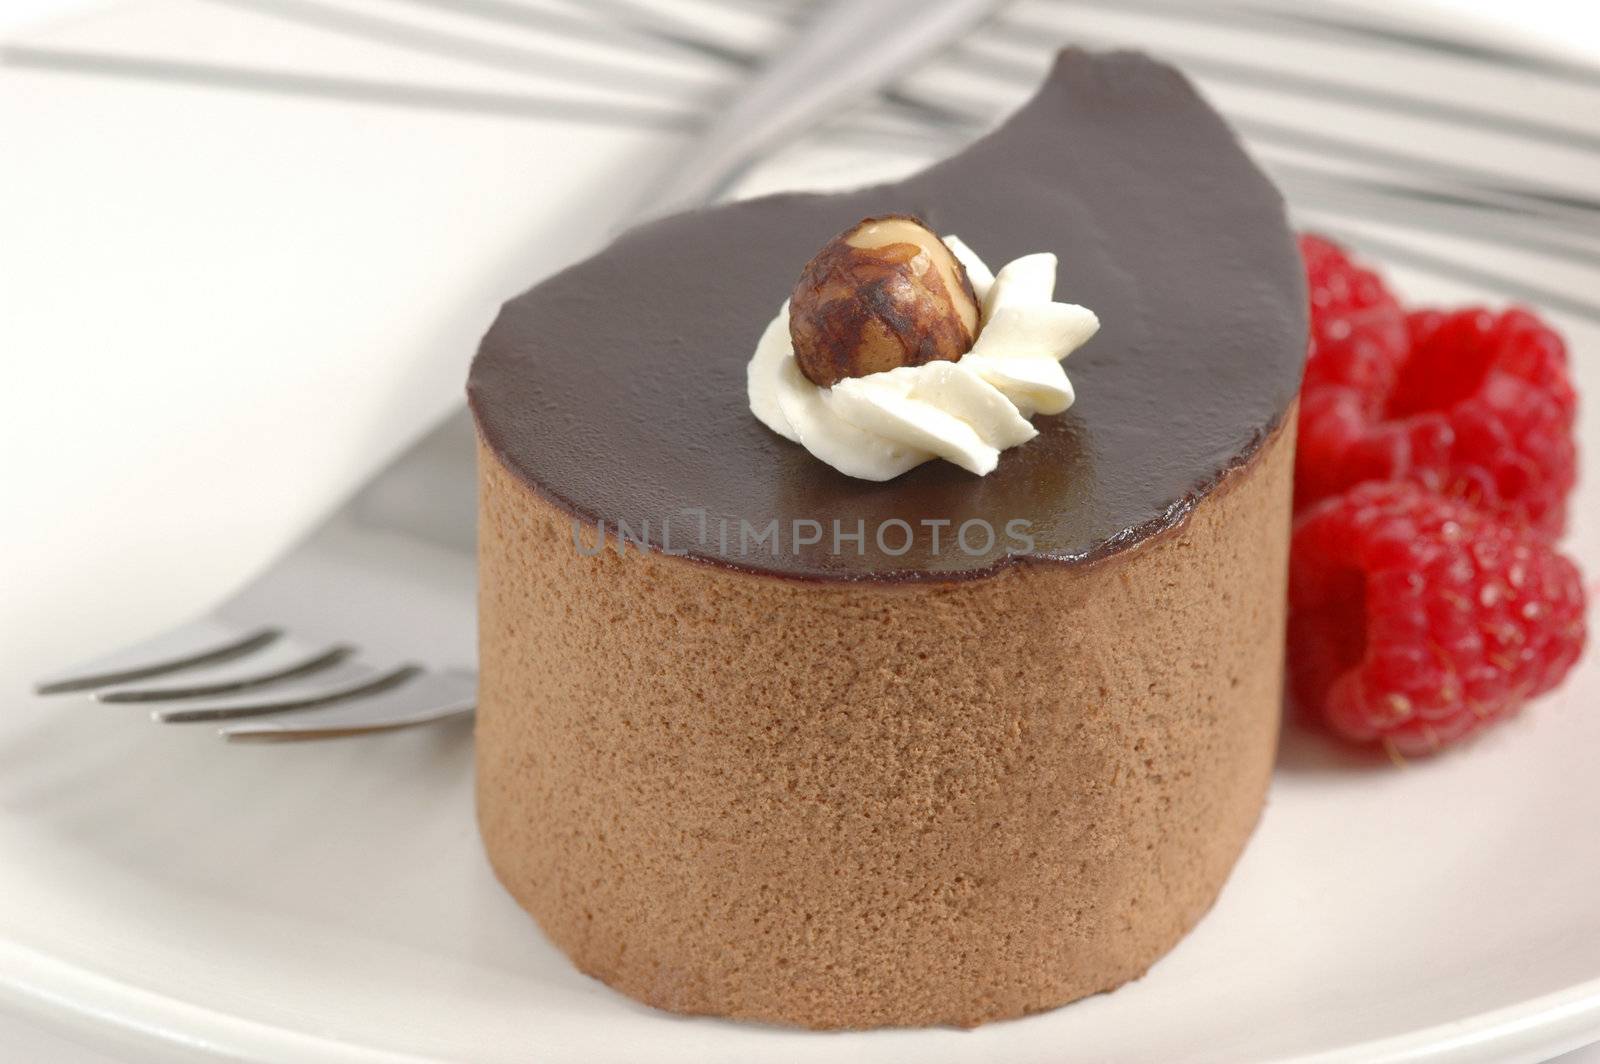 Chocolate Hazelnut Dessert by billberryphotography